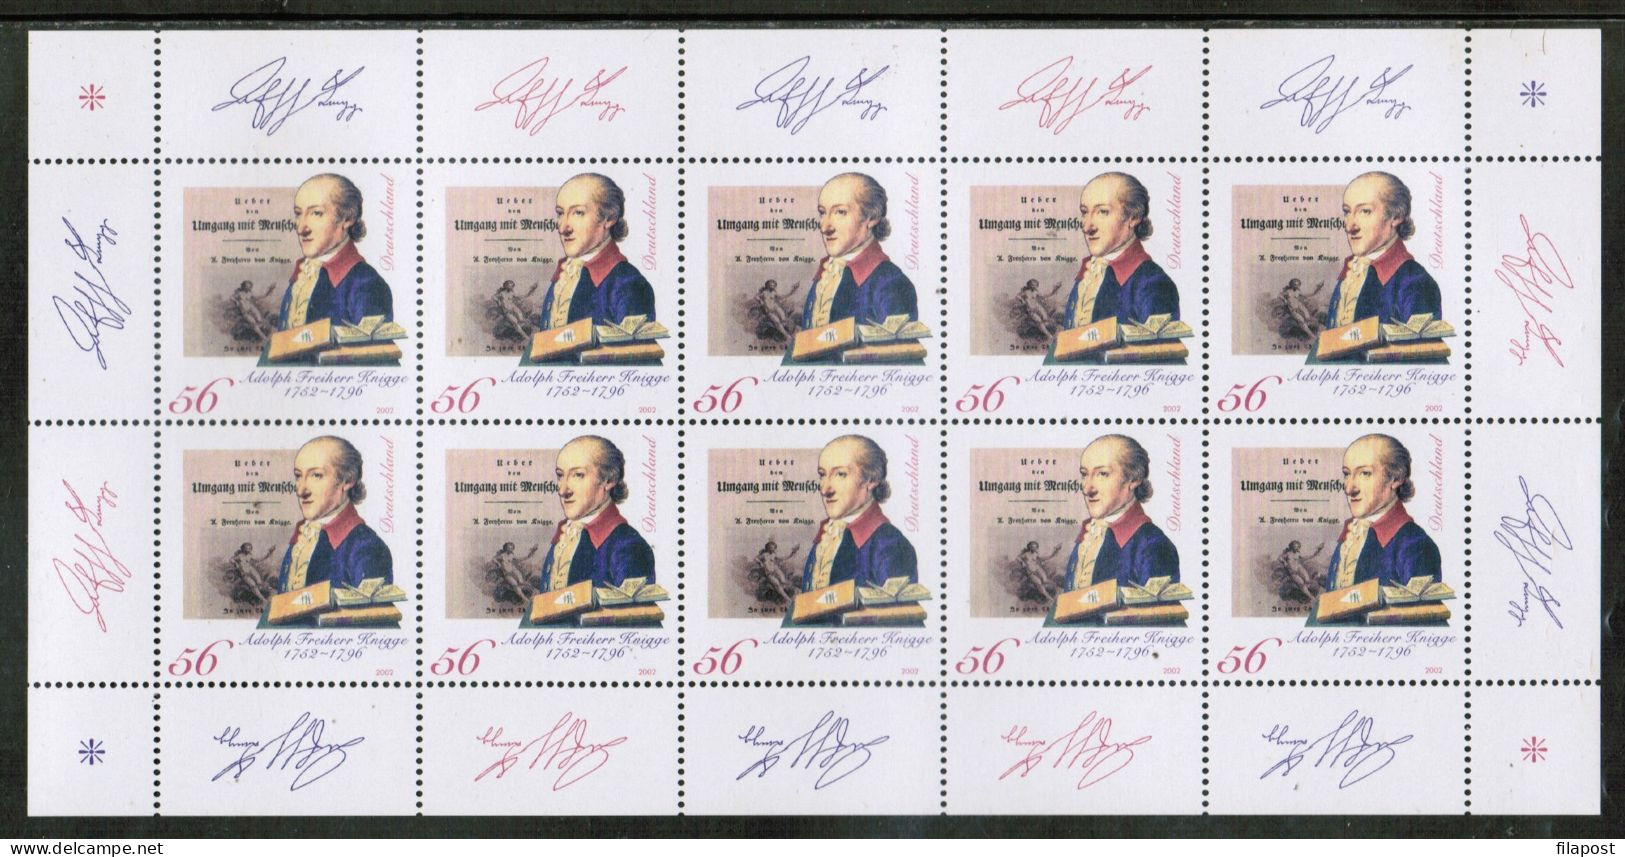 Germany 2002 / Michel 2241 Kb - Adolph Freiherr Knigge, Writer, Freemason, Iluminati - Sheet Of 10 Stamps MNH - Unused Stamps